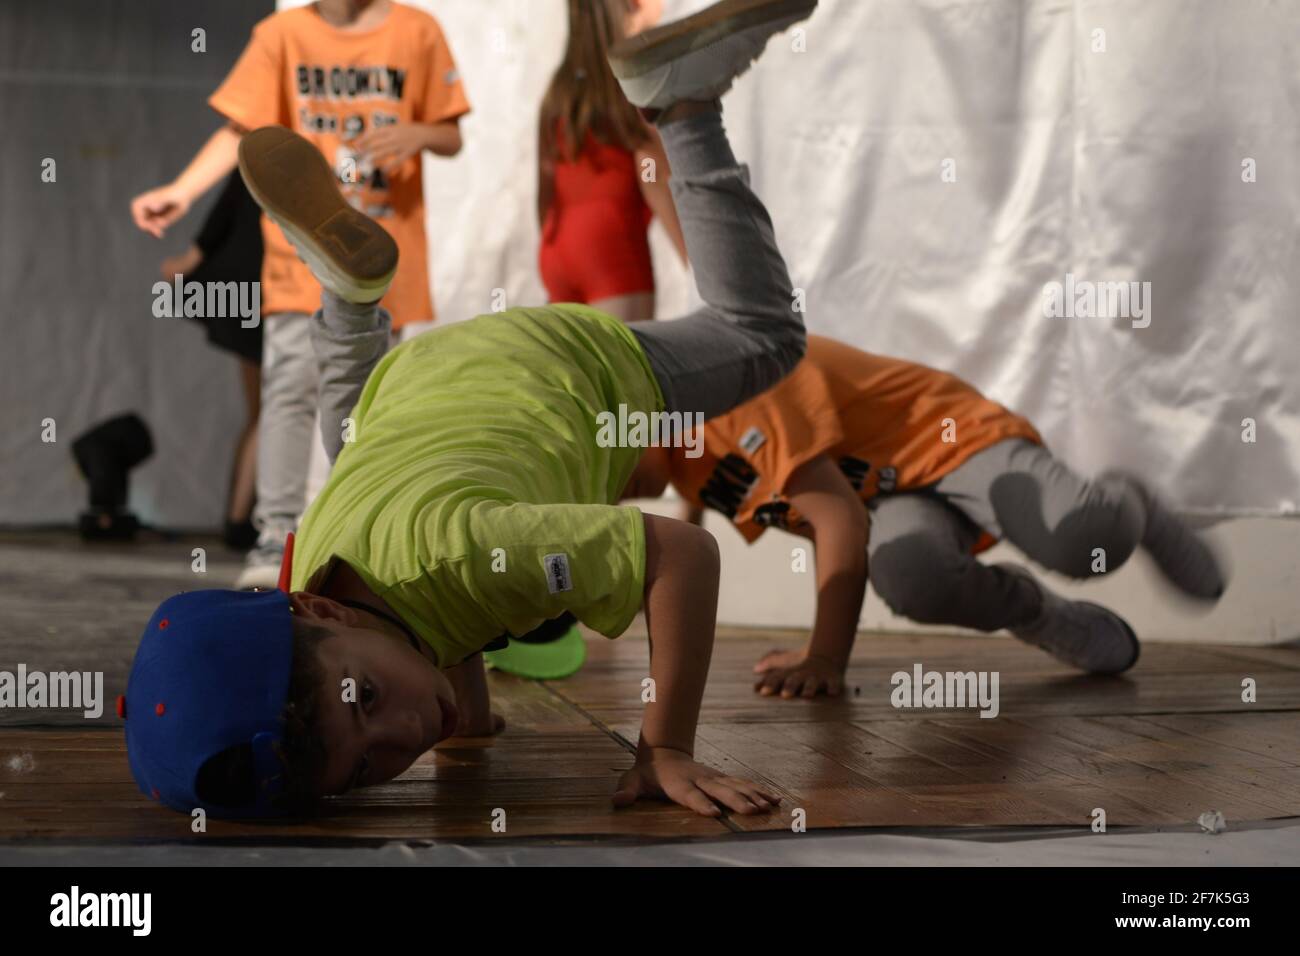 Boys dancing breakdance in frozen baby position. Baby freeze breakdance. Stock Photo